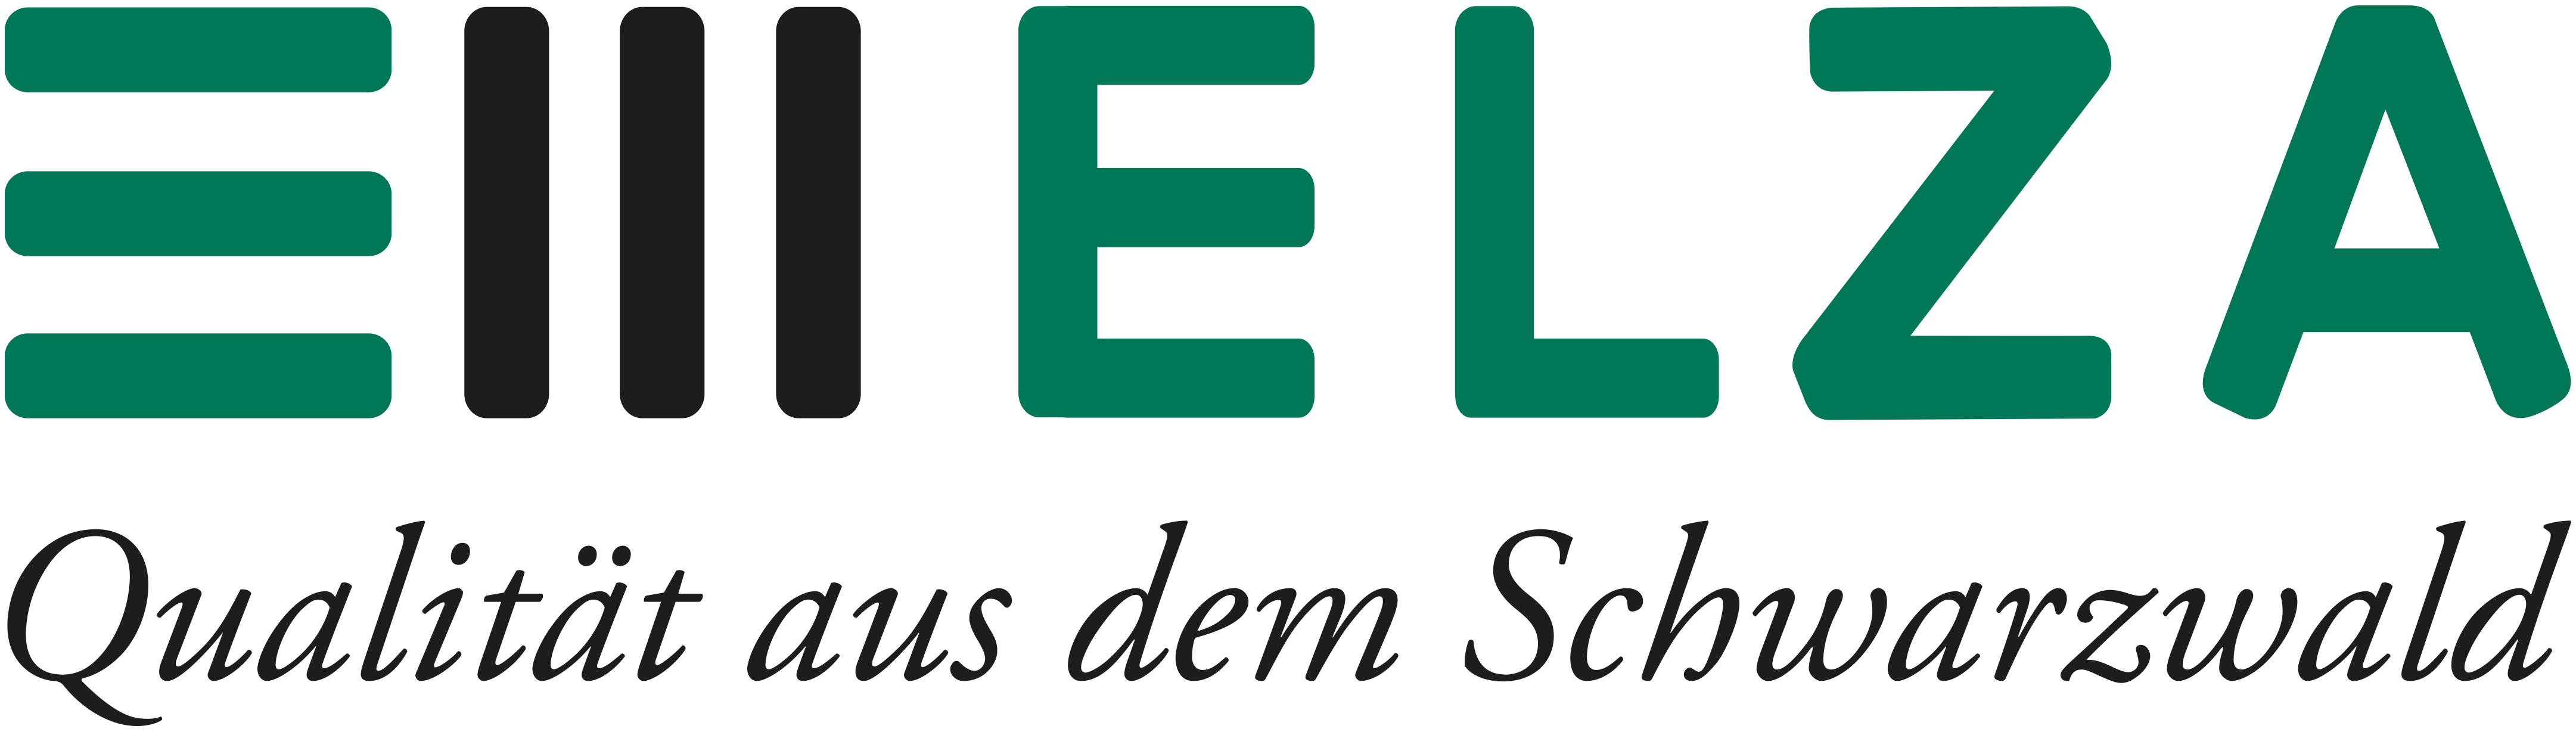 Elza GmbH & Co. KG